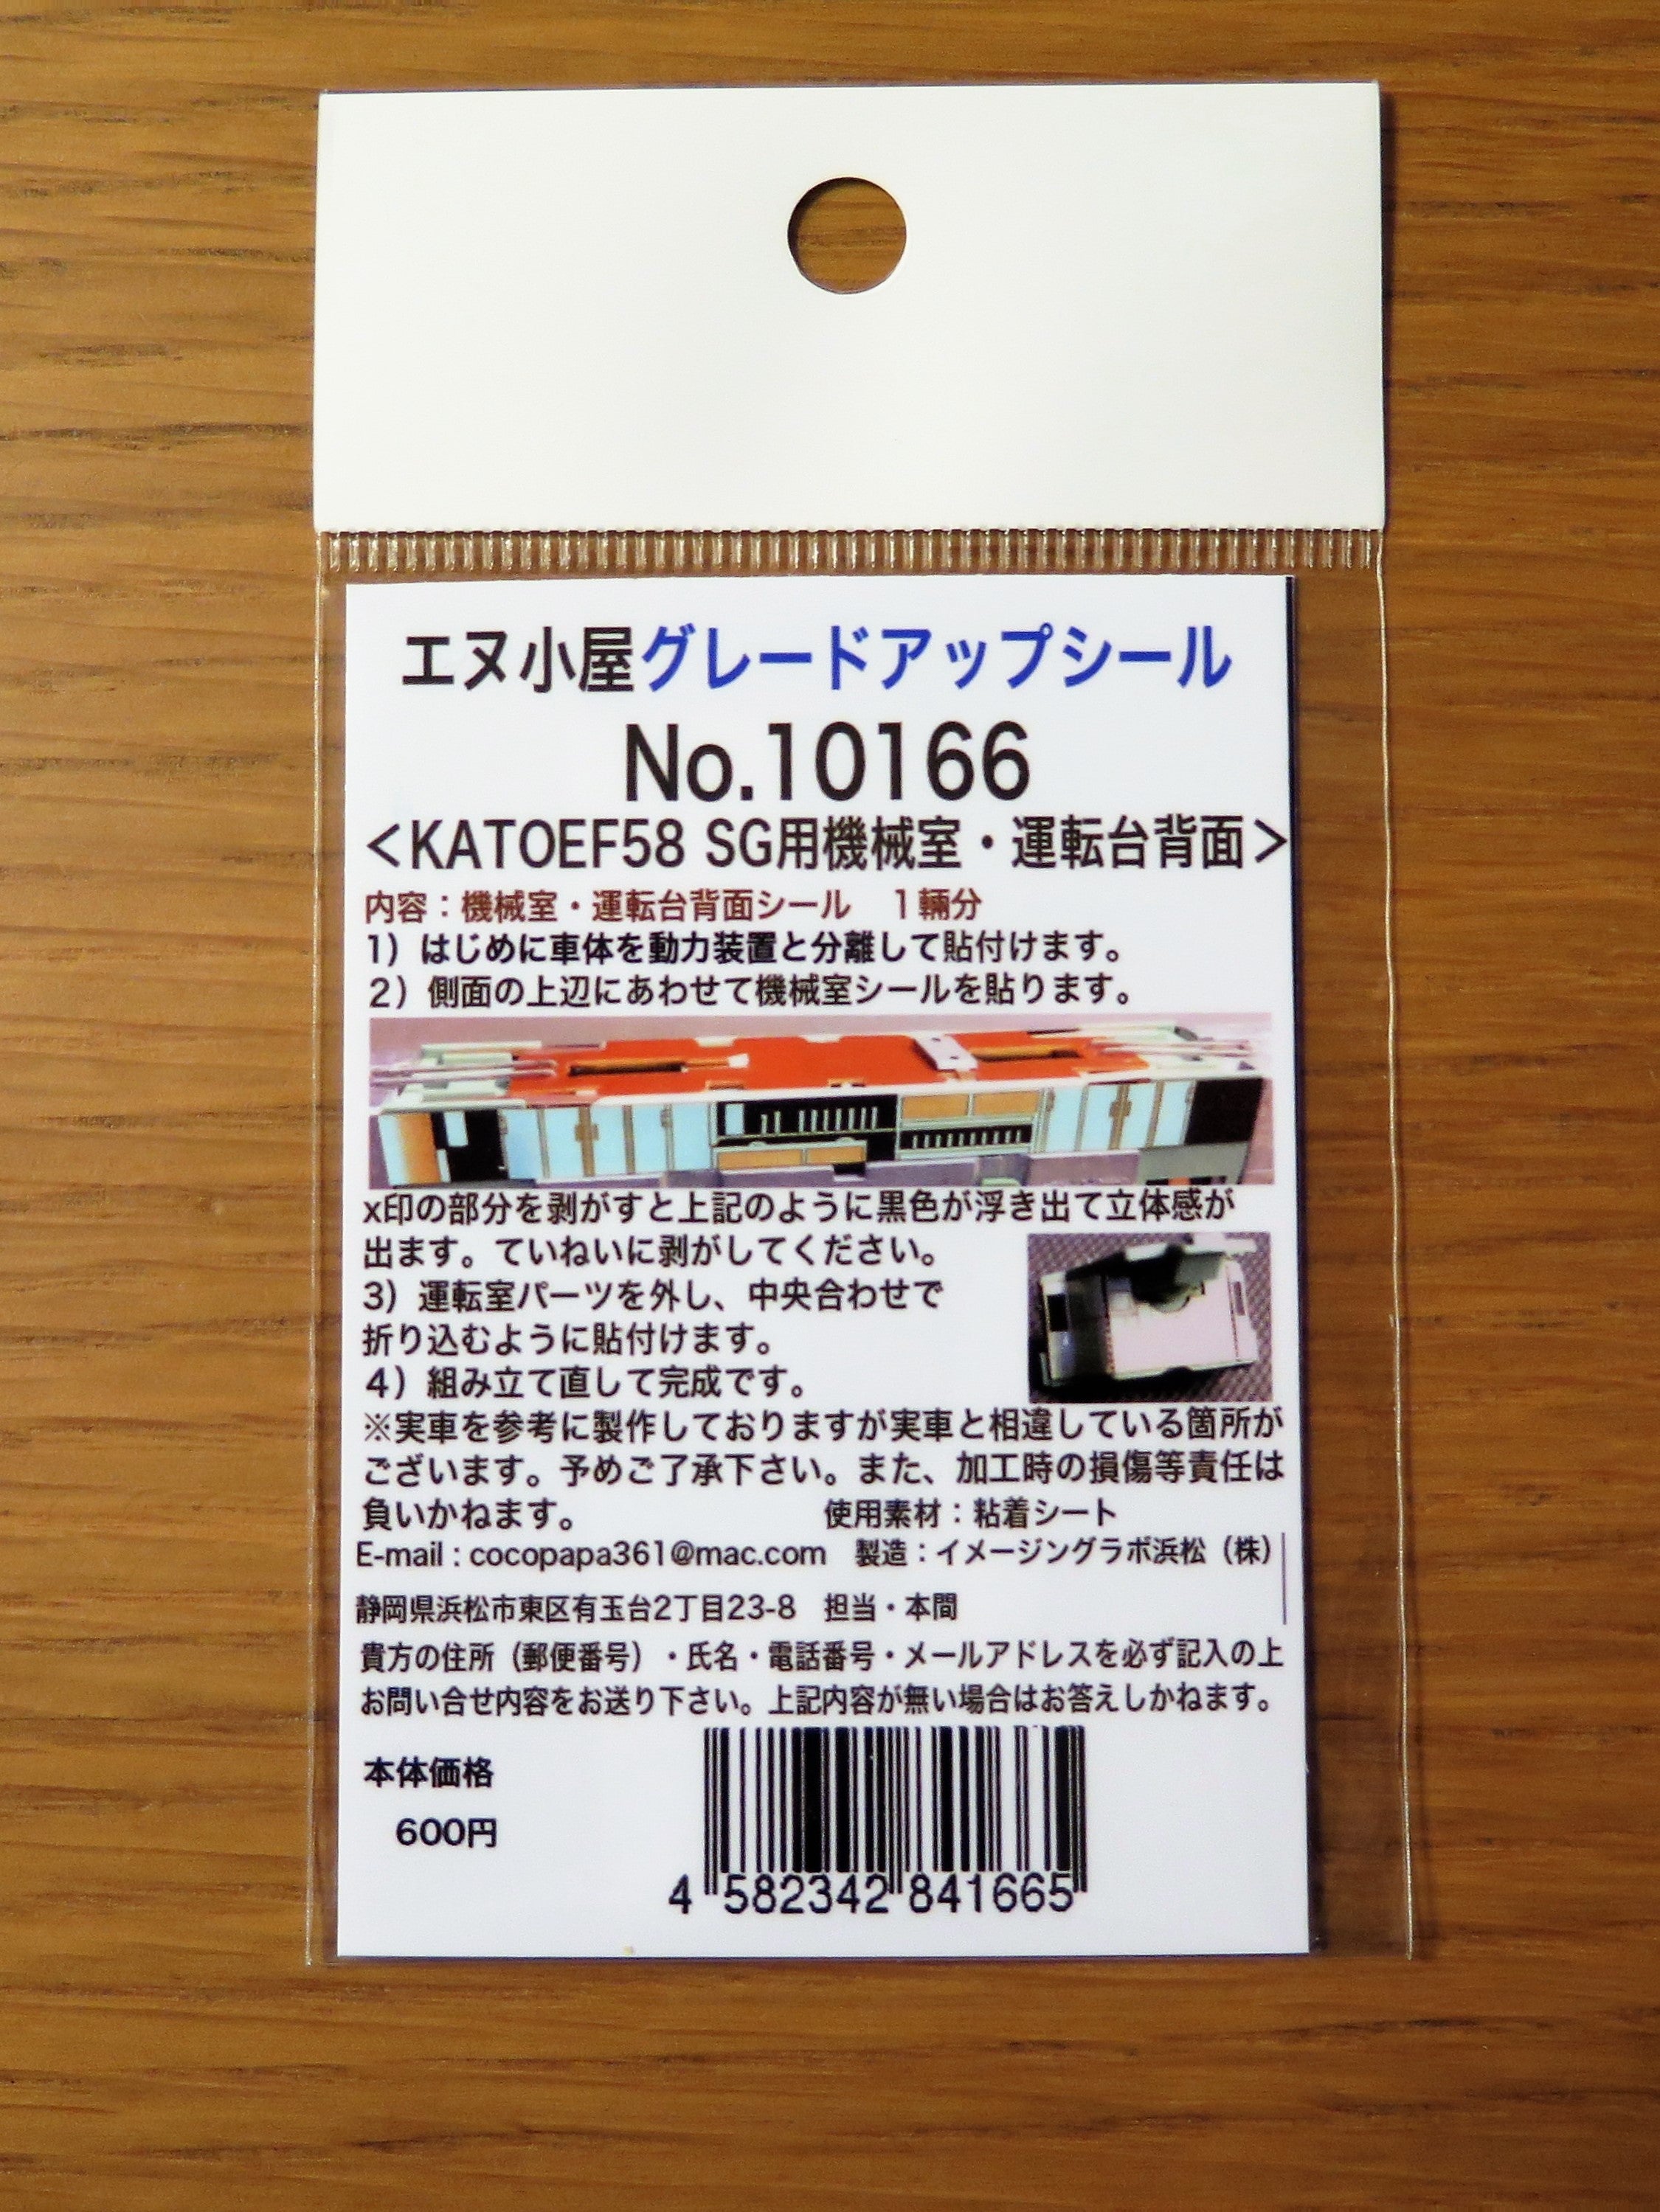 KATO EF58 エヌ小屋グレードアップシール貼付作業 | Persimmon's Cafe